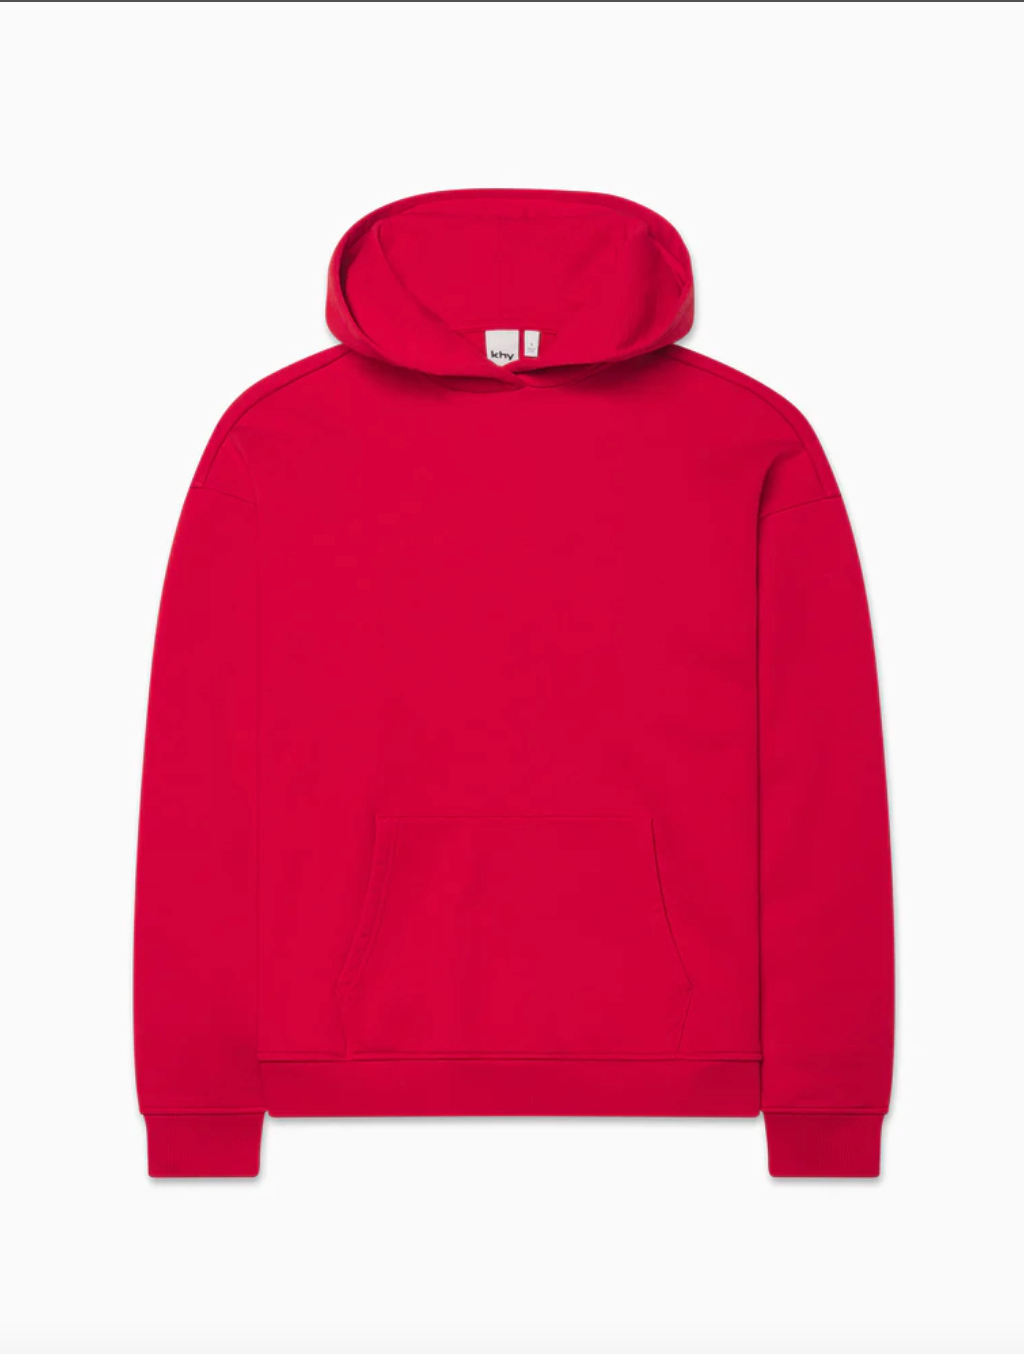 Khy + Fleece Oversized Hoodie Red